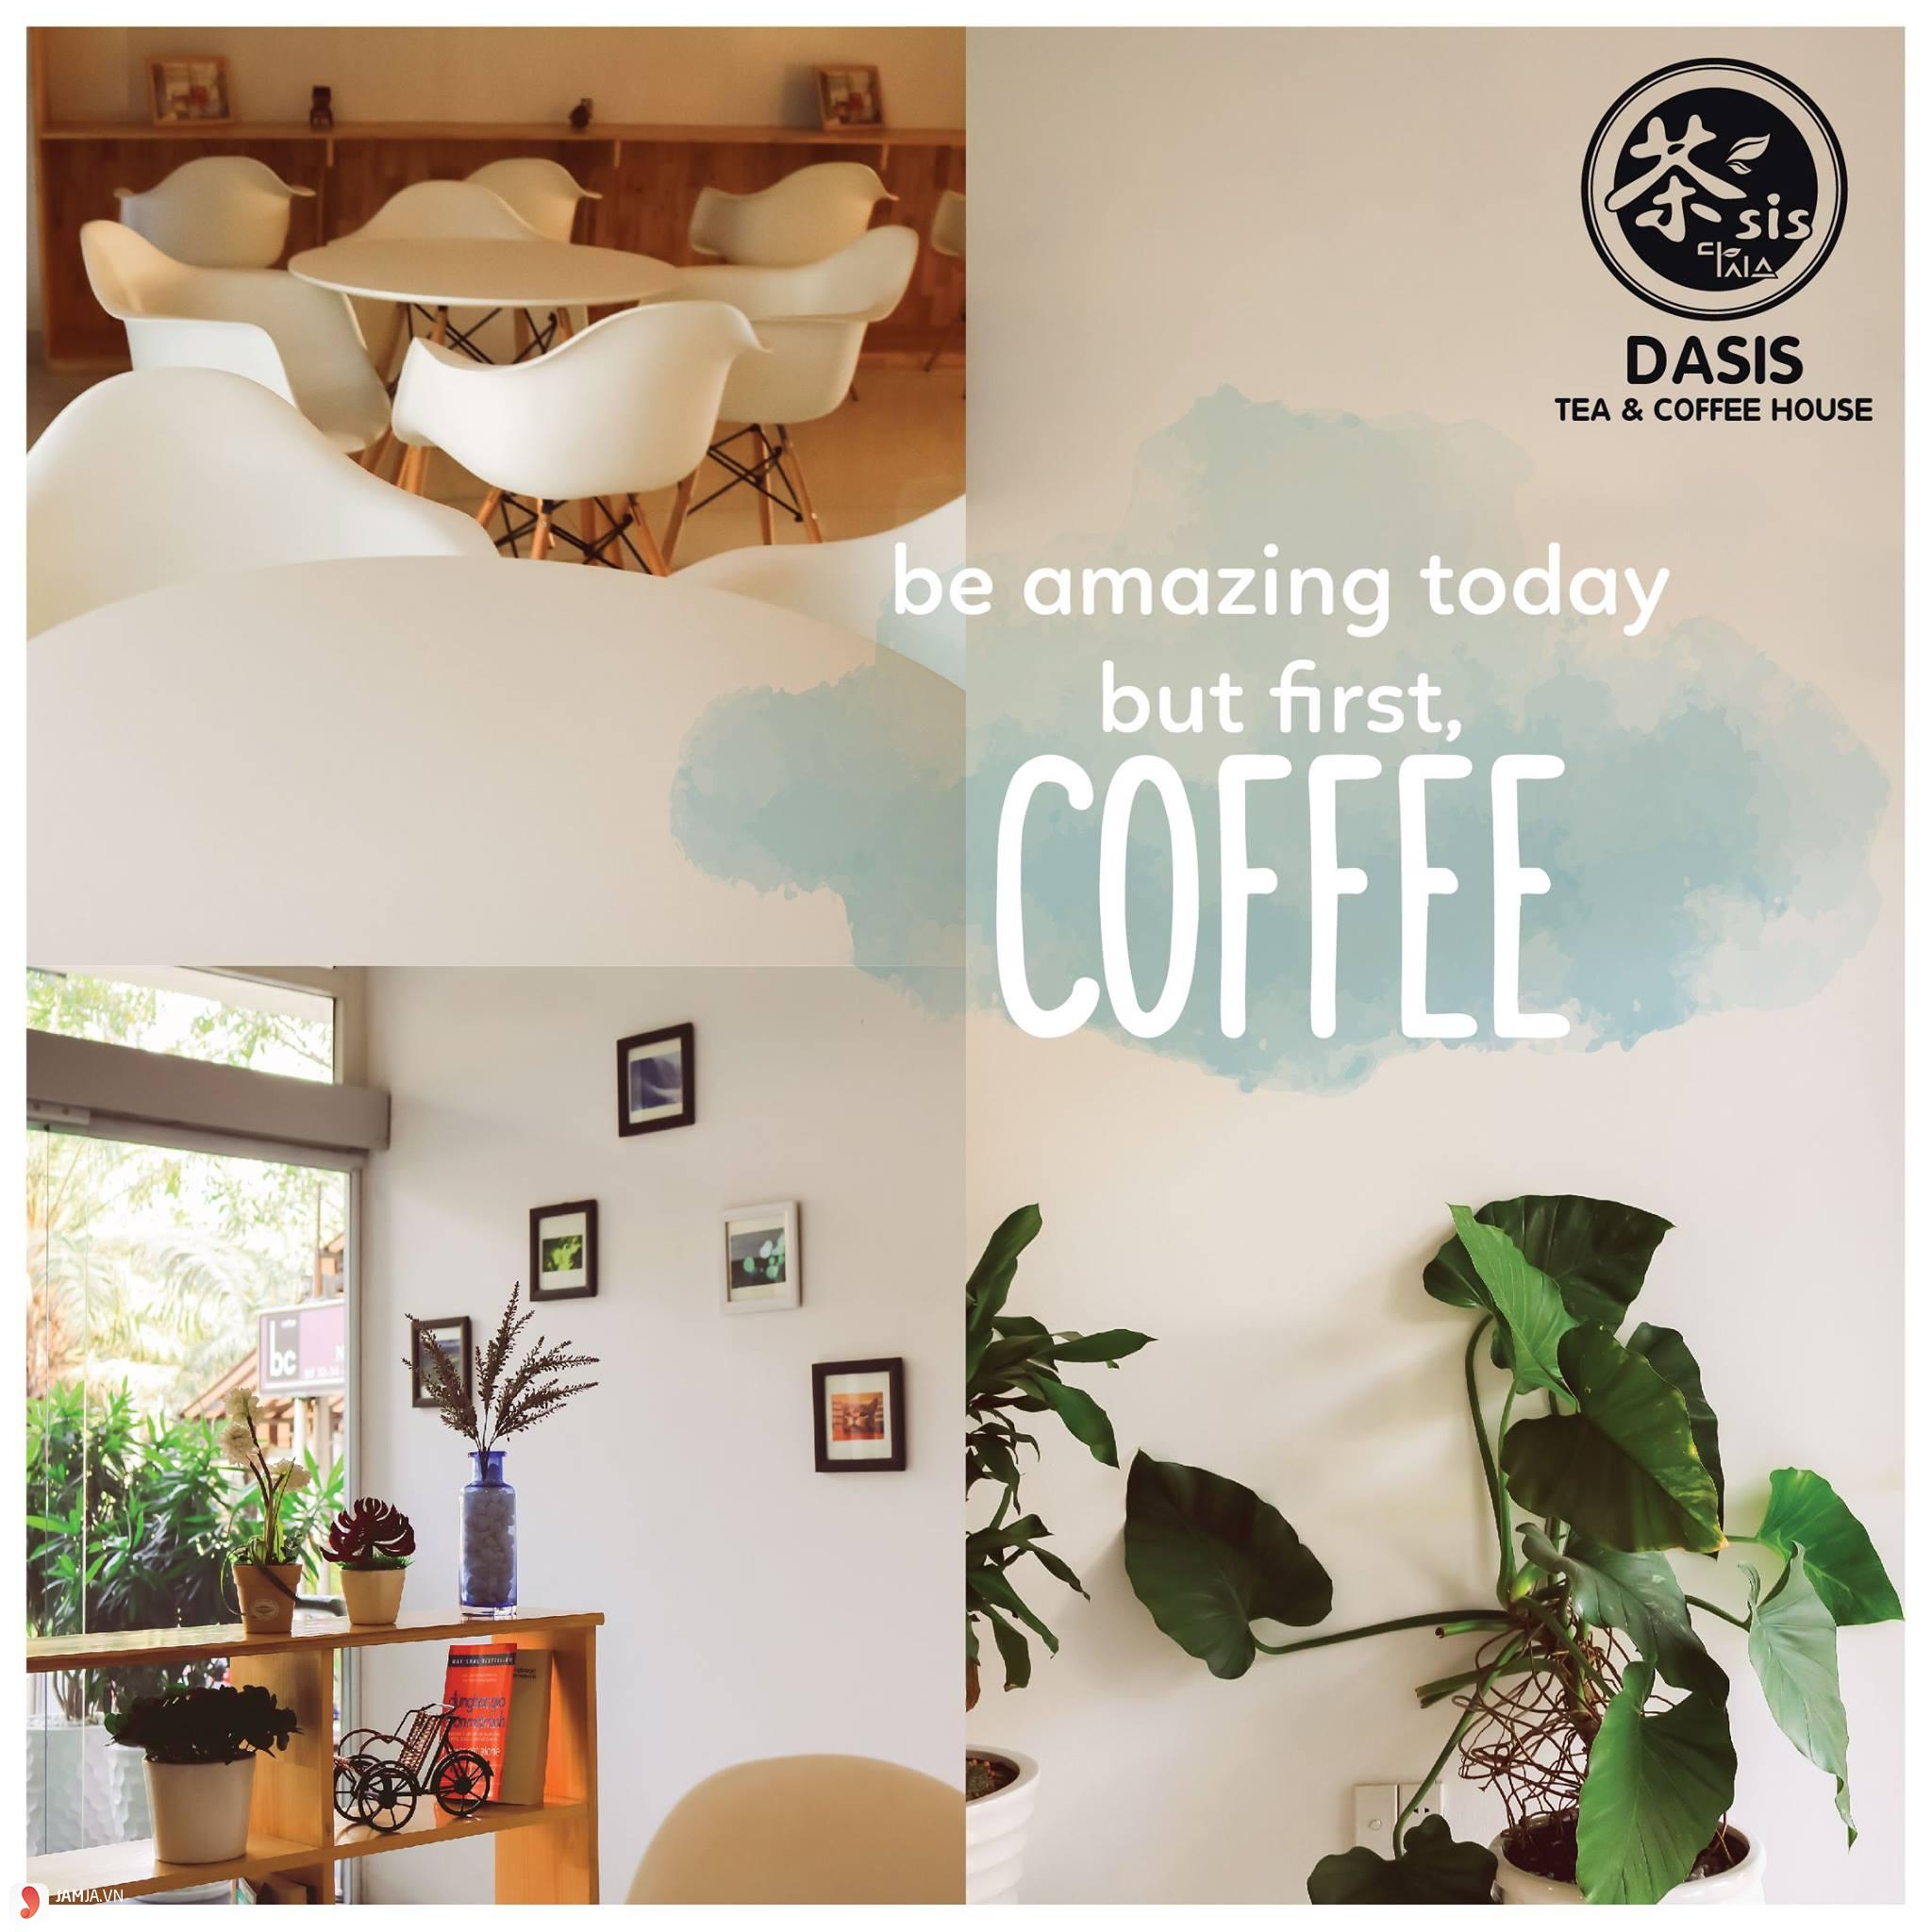 Dasis Tea & Coffee House decor